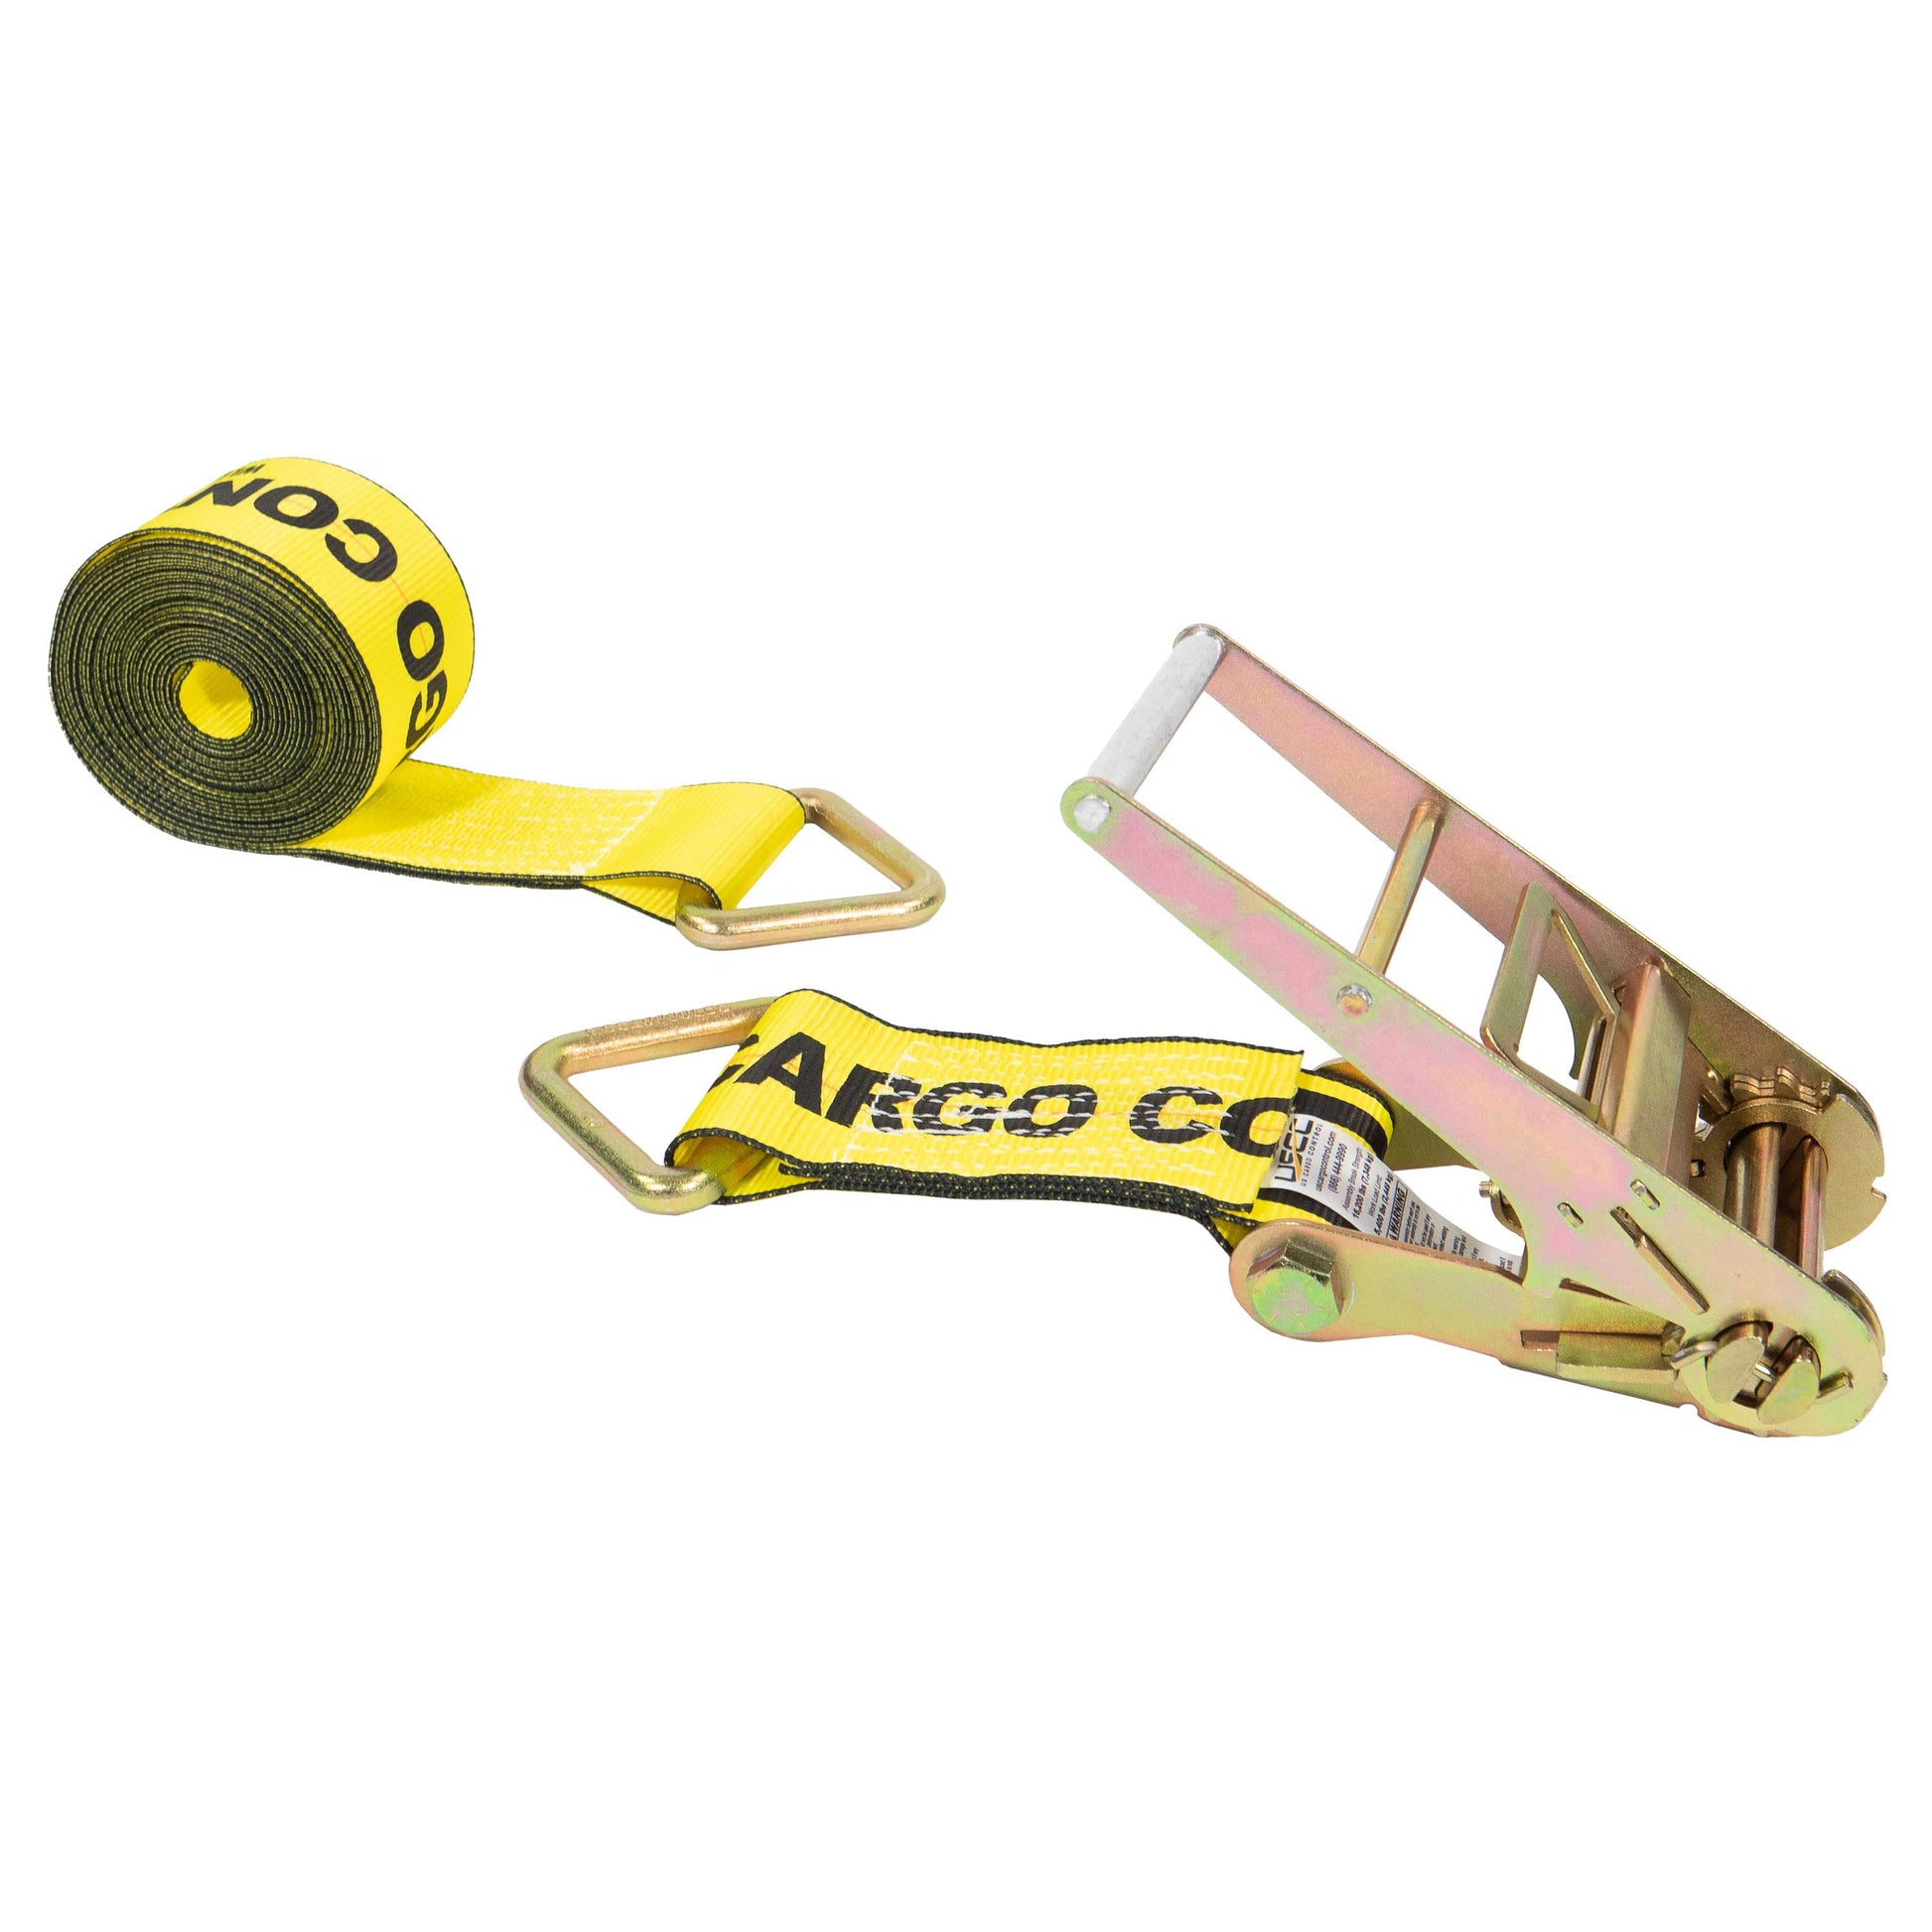 27' 4" heavy-duty yellow D ring ratchet strap